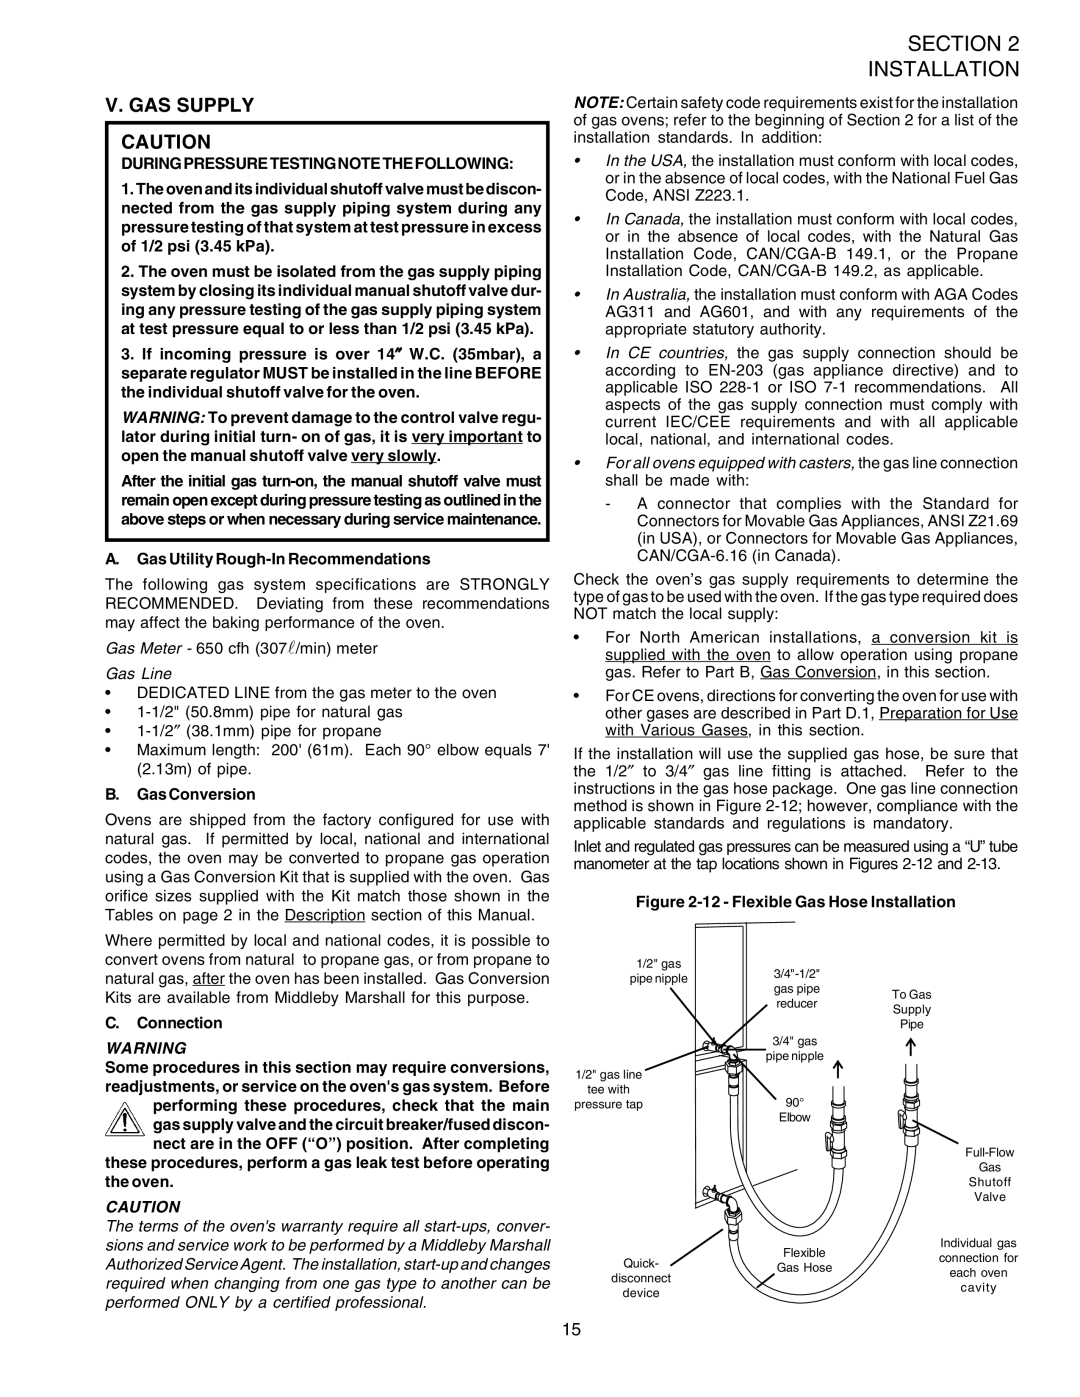 Middleby Marshall PS520G installation manual V. Gas Supply 